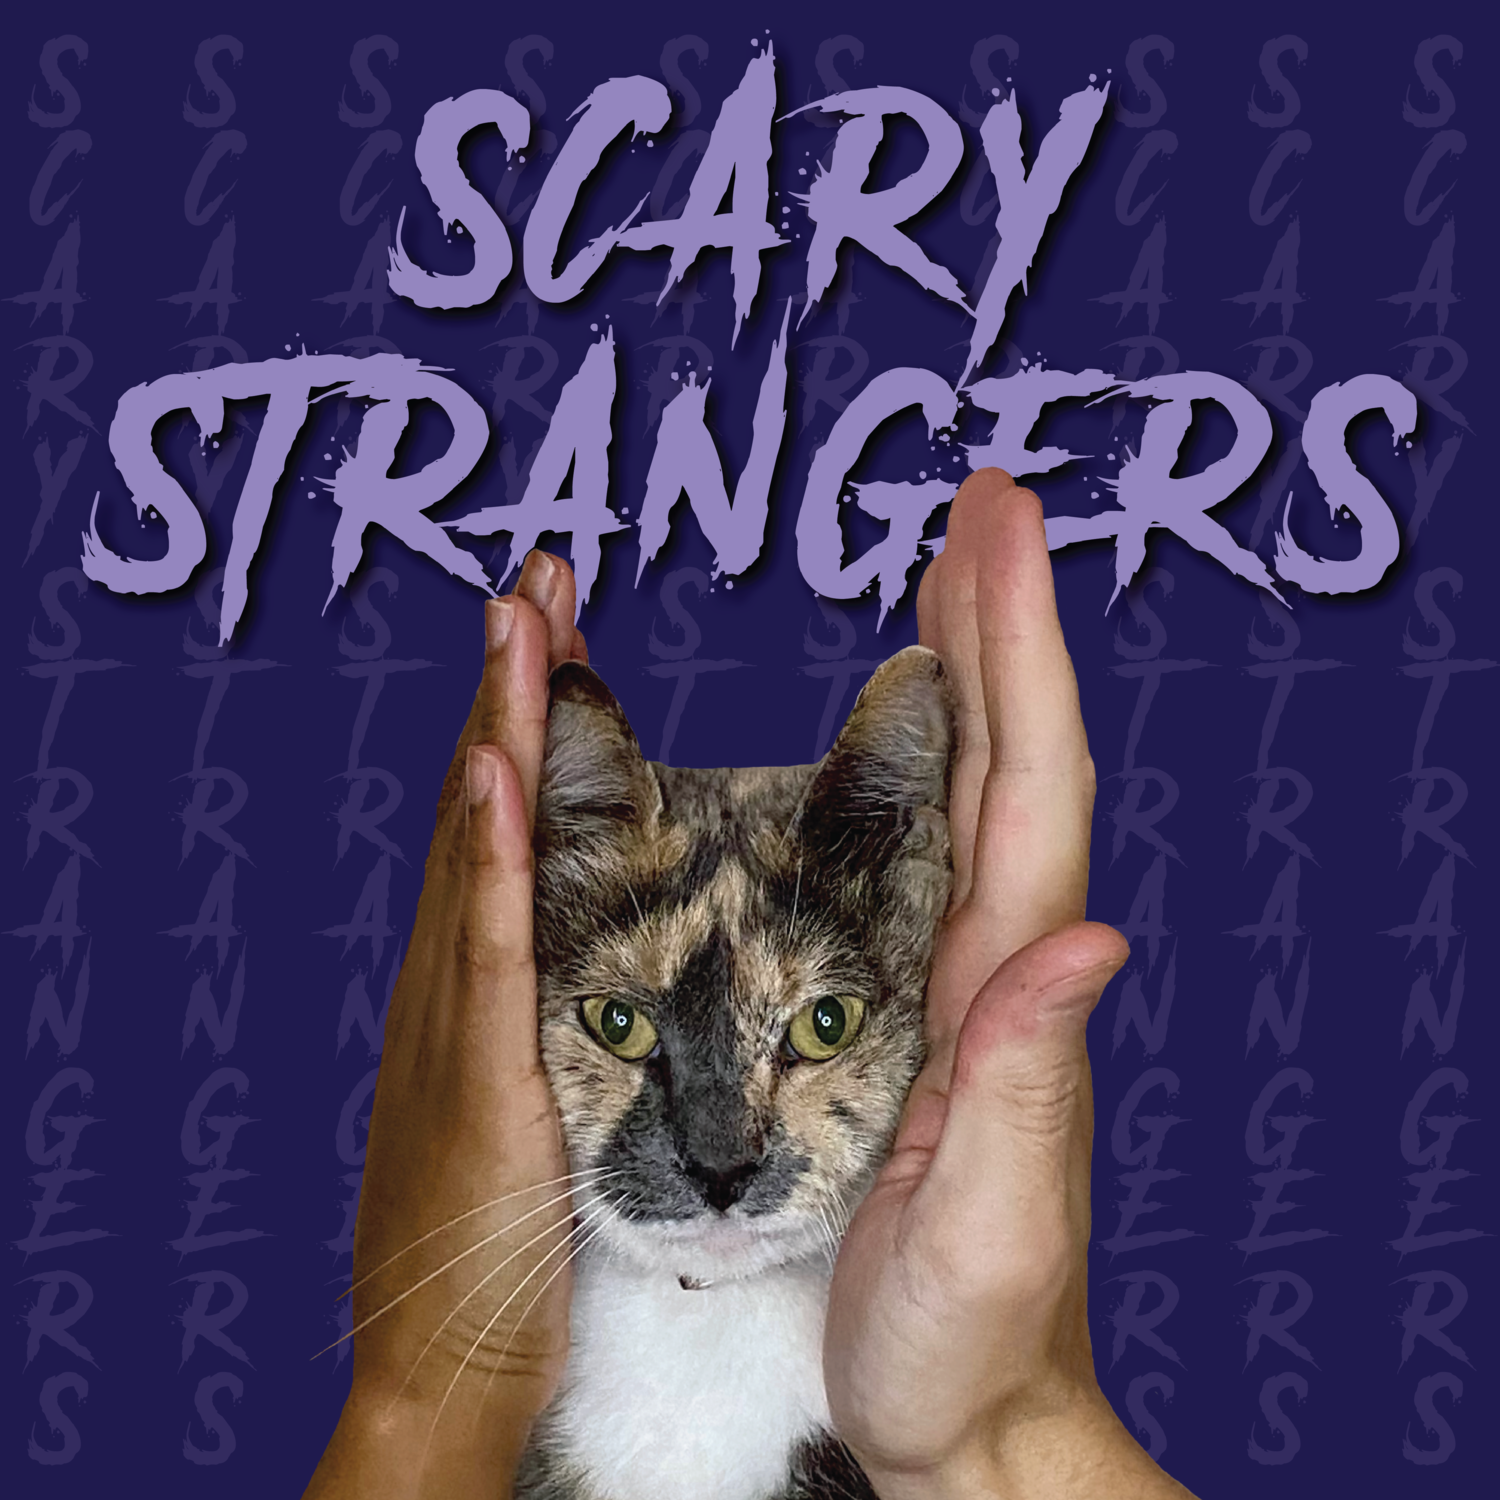 Scary Strangers